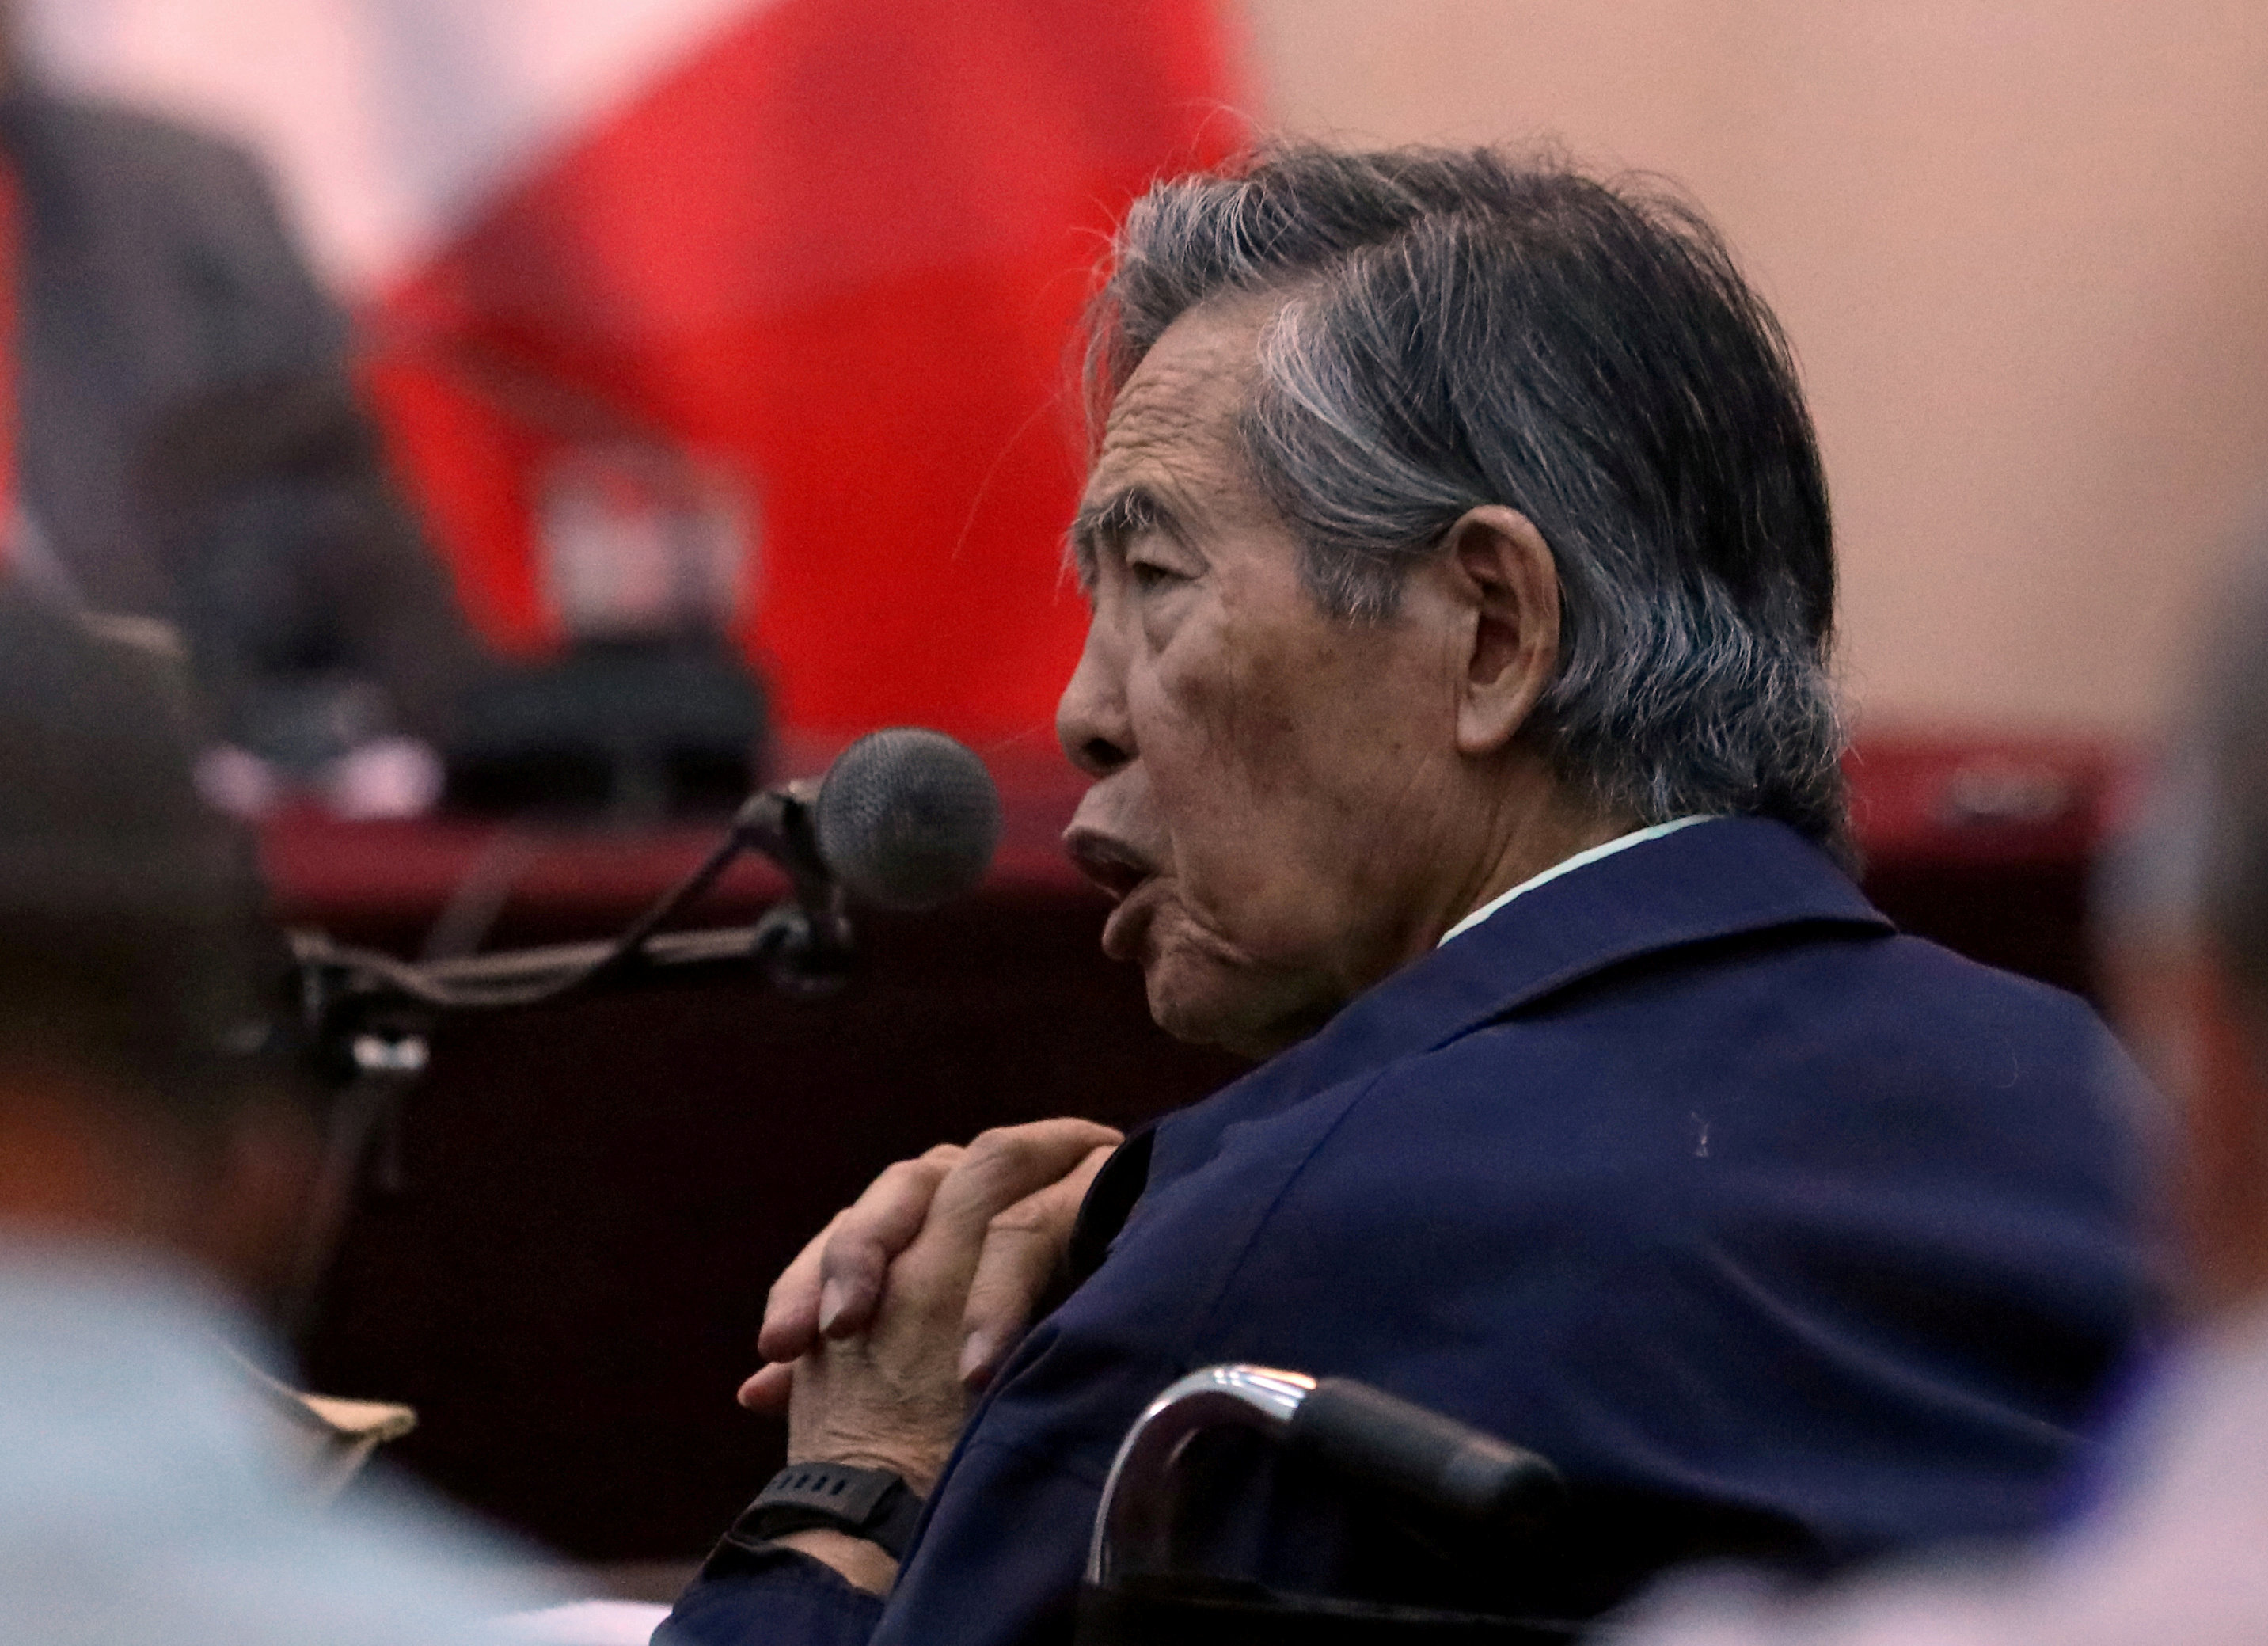 Alberto Fujimori alienta a su hija Keiko a enfrentar la arbitrariedad e injusticia